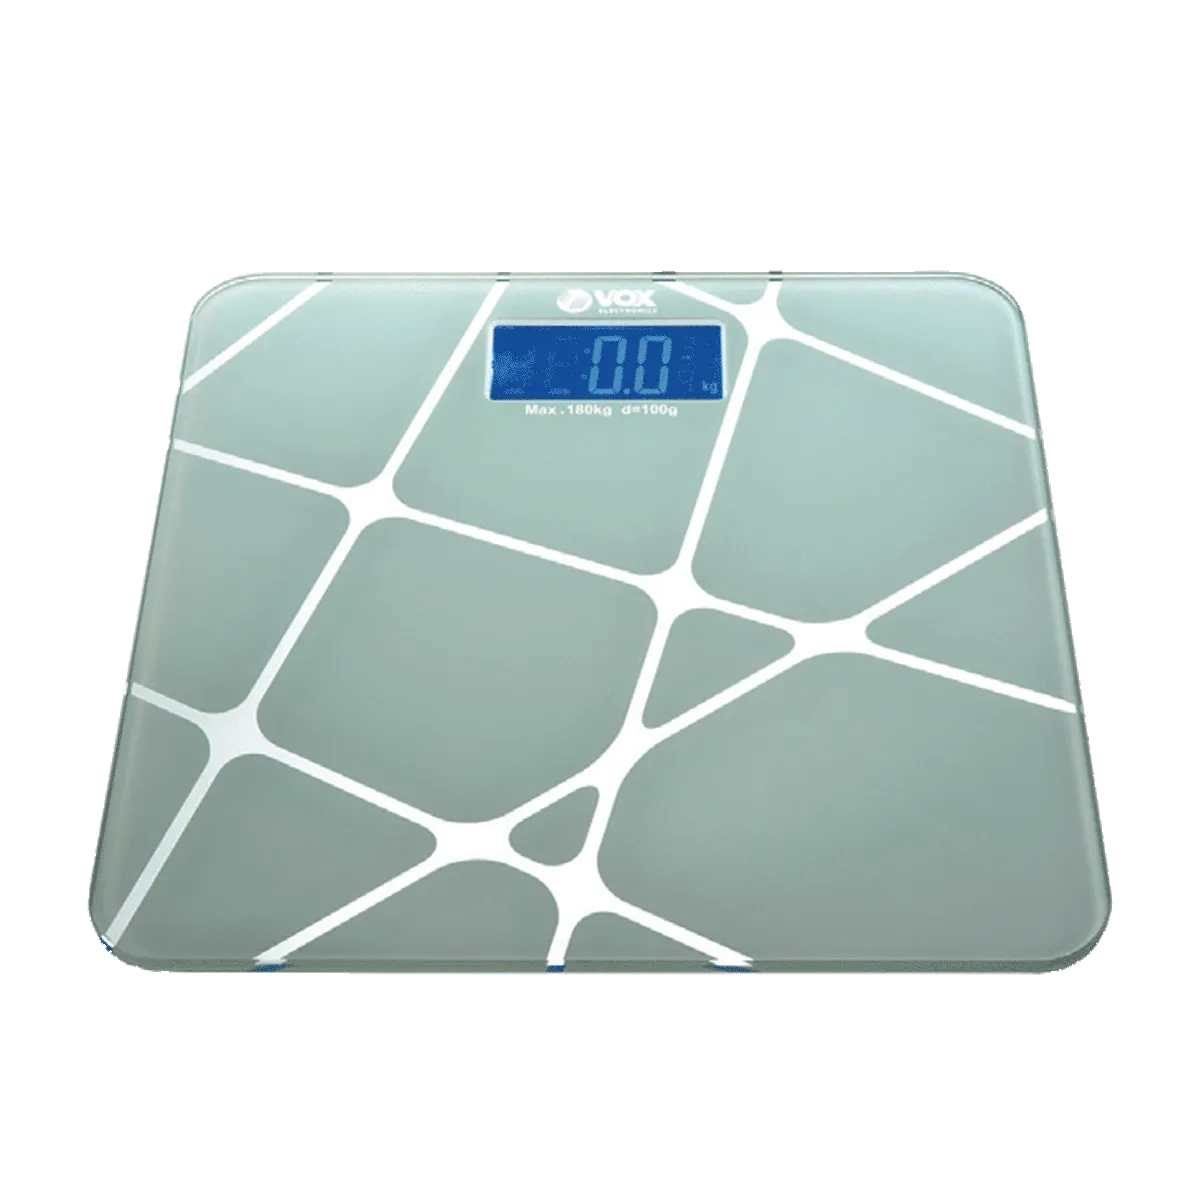 Body scale PW 435-01 